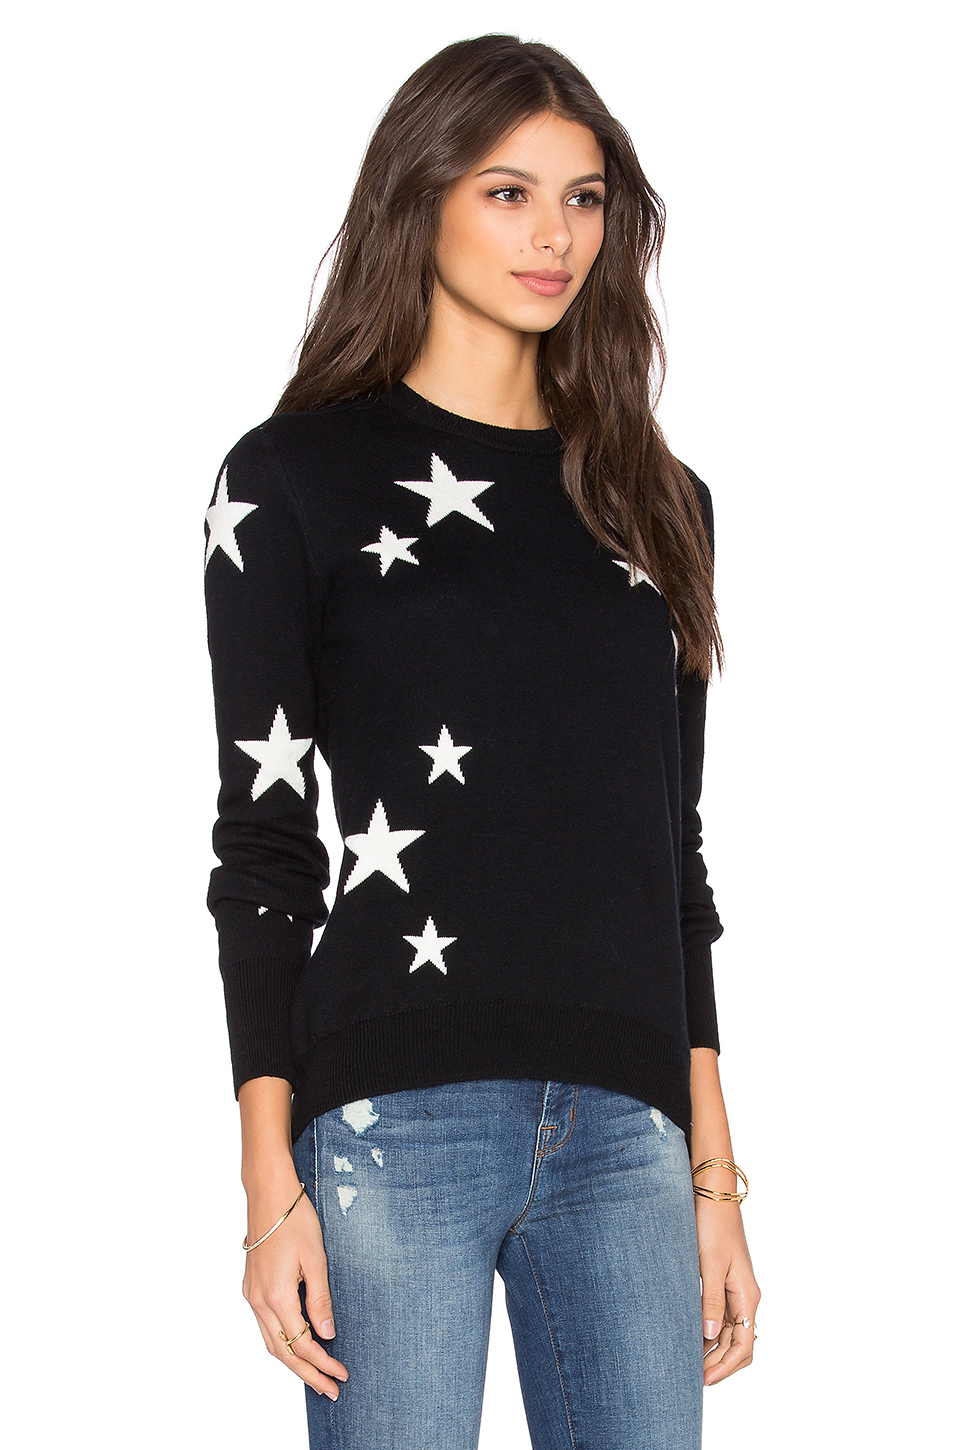 Michael Stars Cotton Star Intarsia Sweater in Black & Ivory (Black) - Lyst